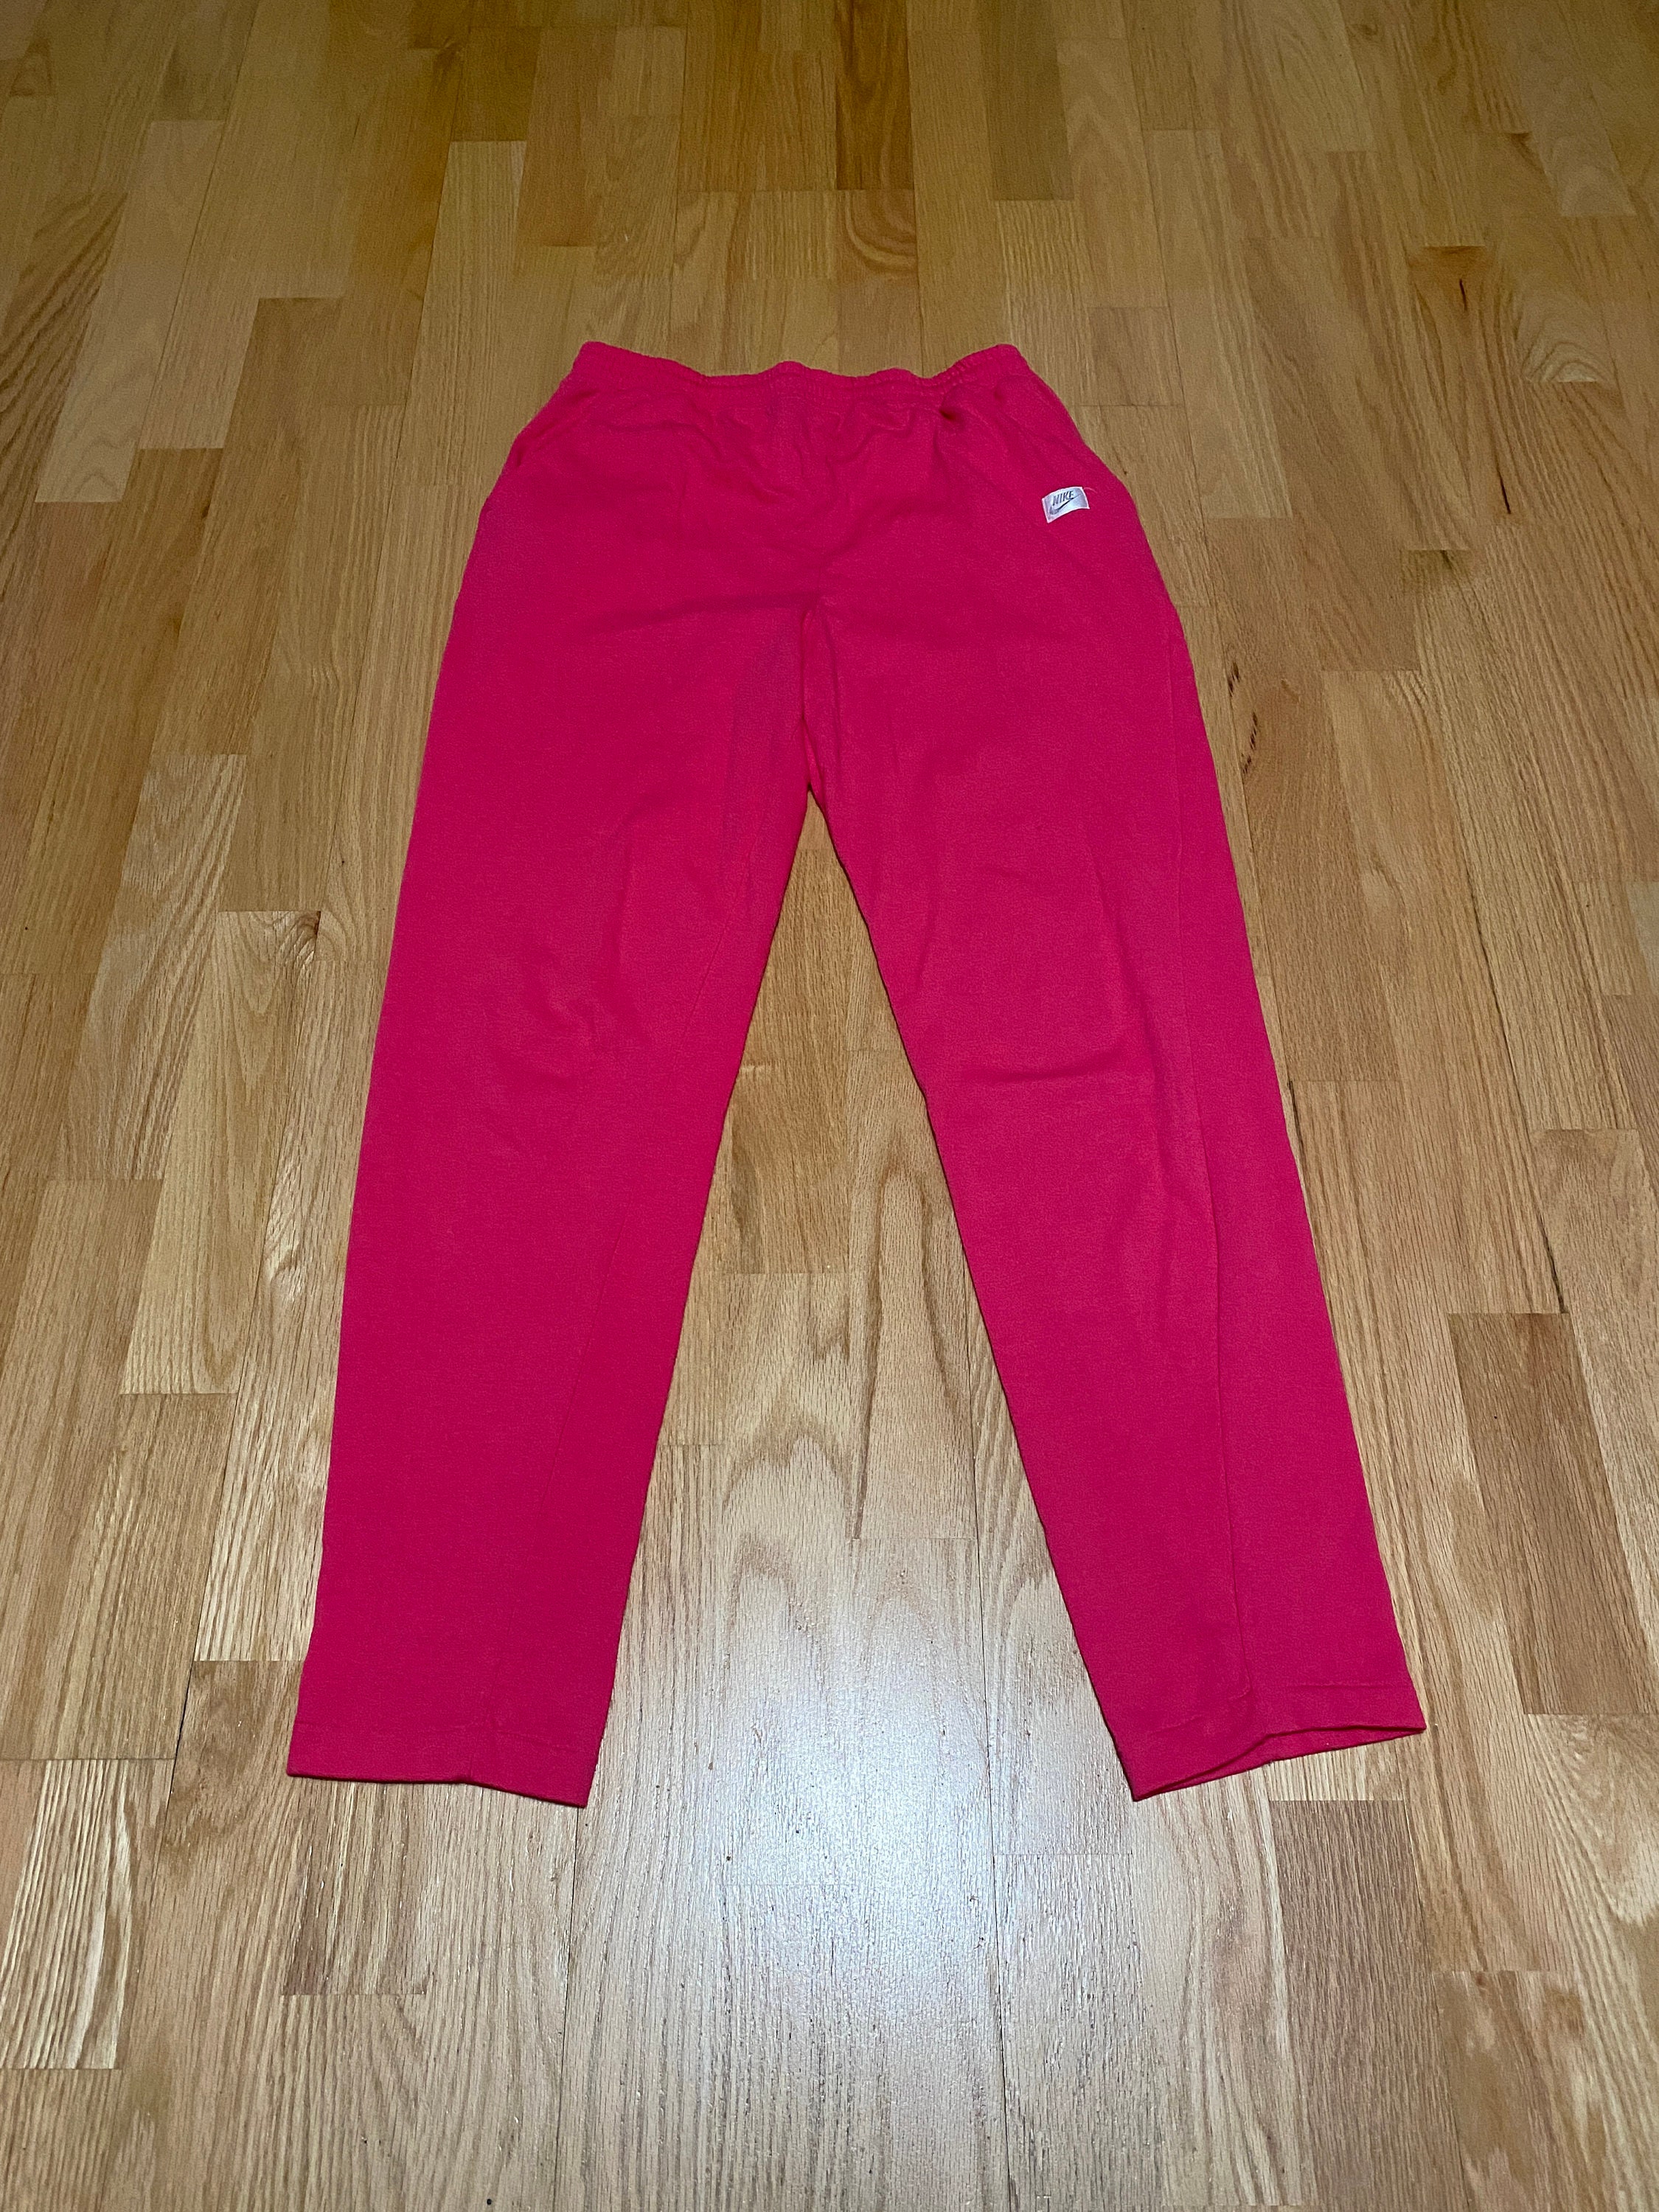 Vintage 90s NIKE Womens White Pink Wide Leg Track Pants Size Medium S  Jersey